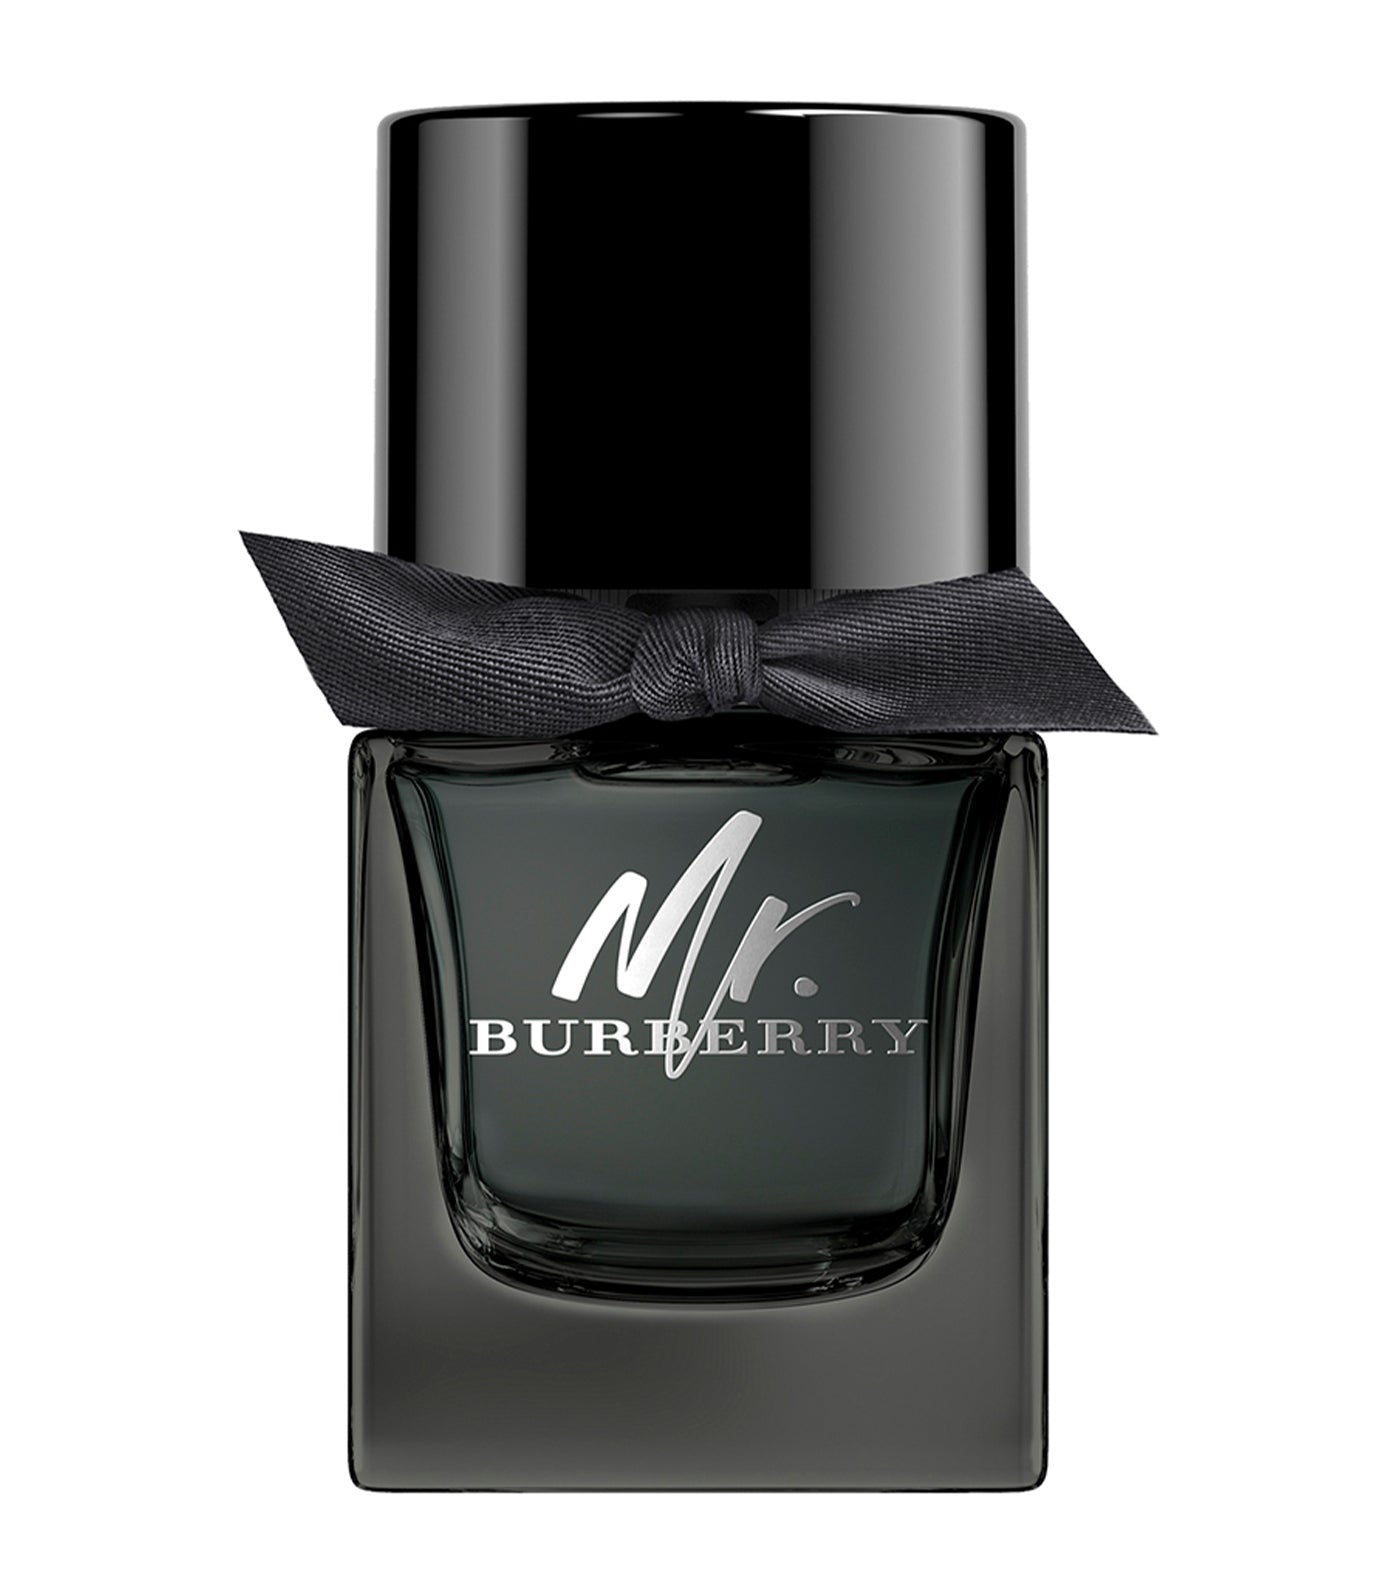 Mr. Burberry Eau de Parfum by Burberry 50ml